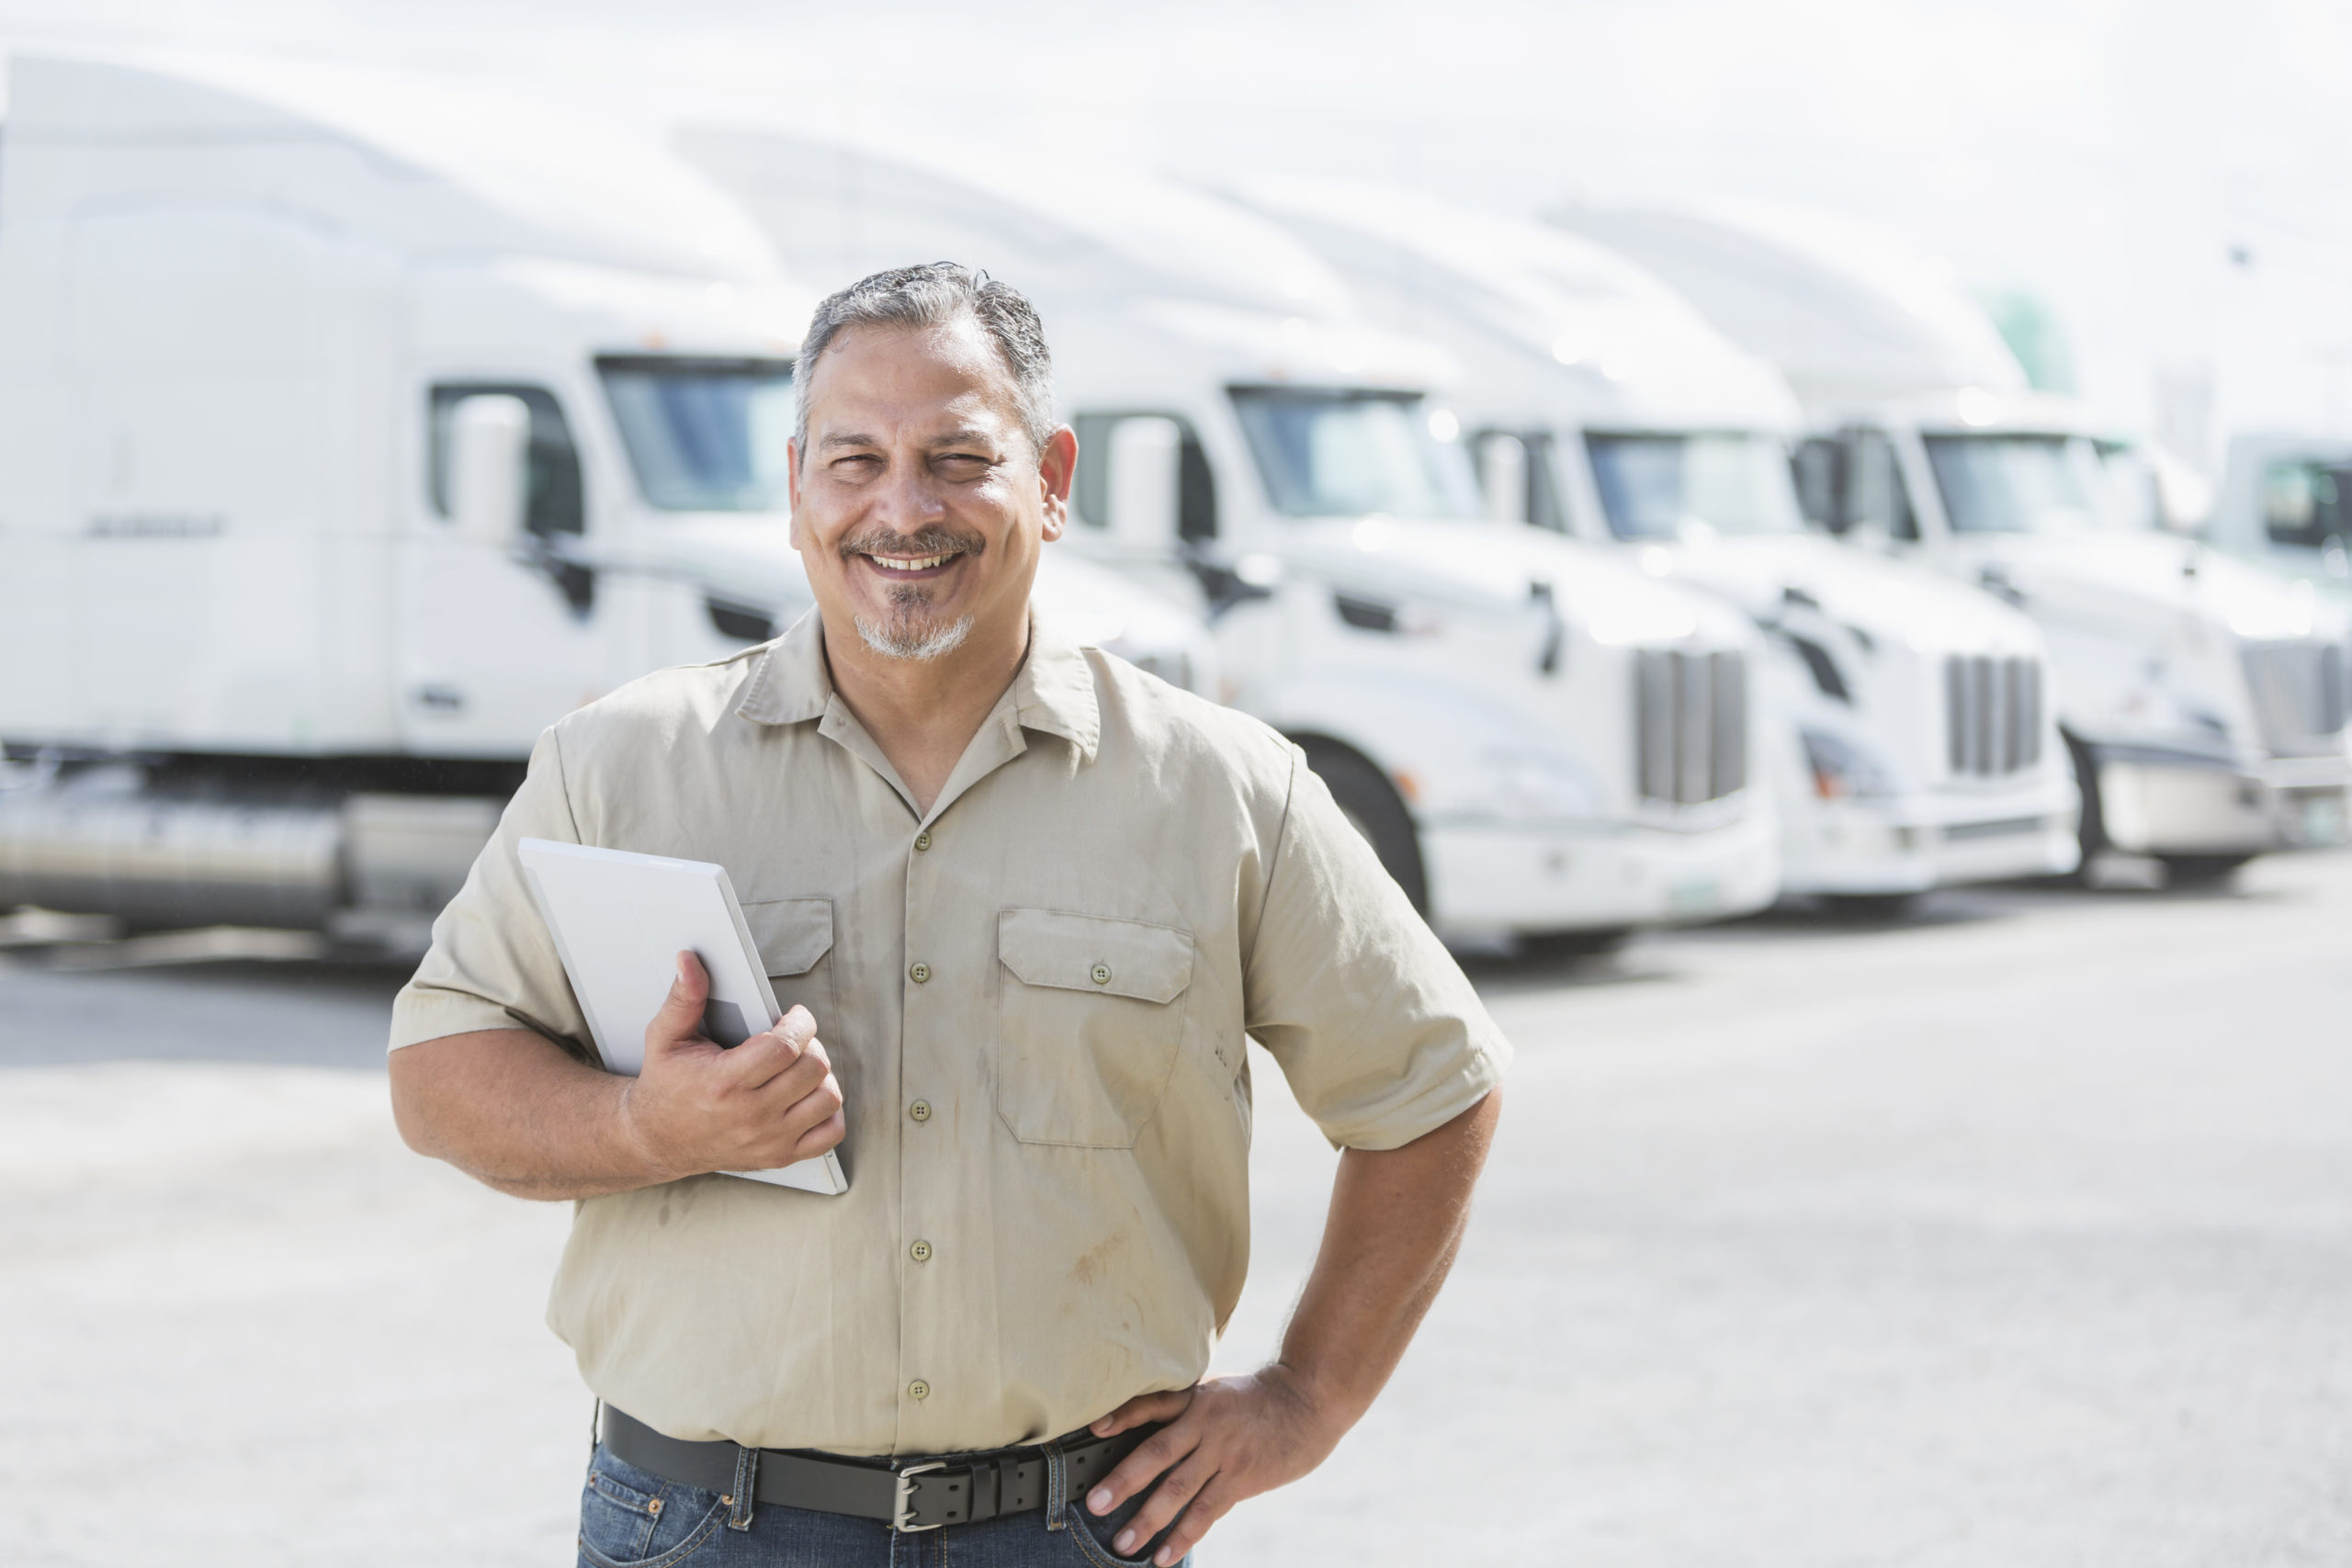 Hispanic man standing in front of semi-trucks